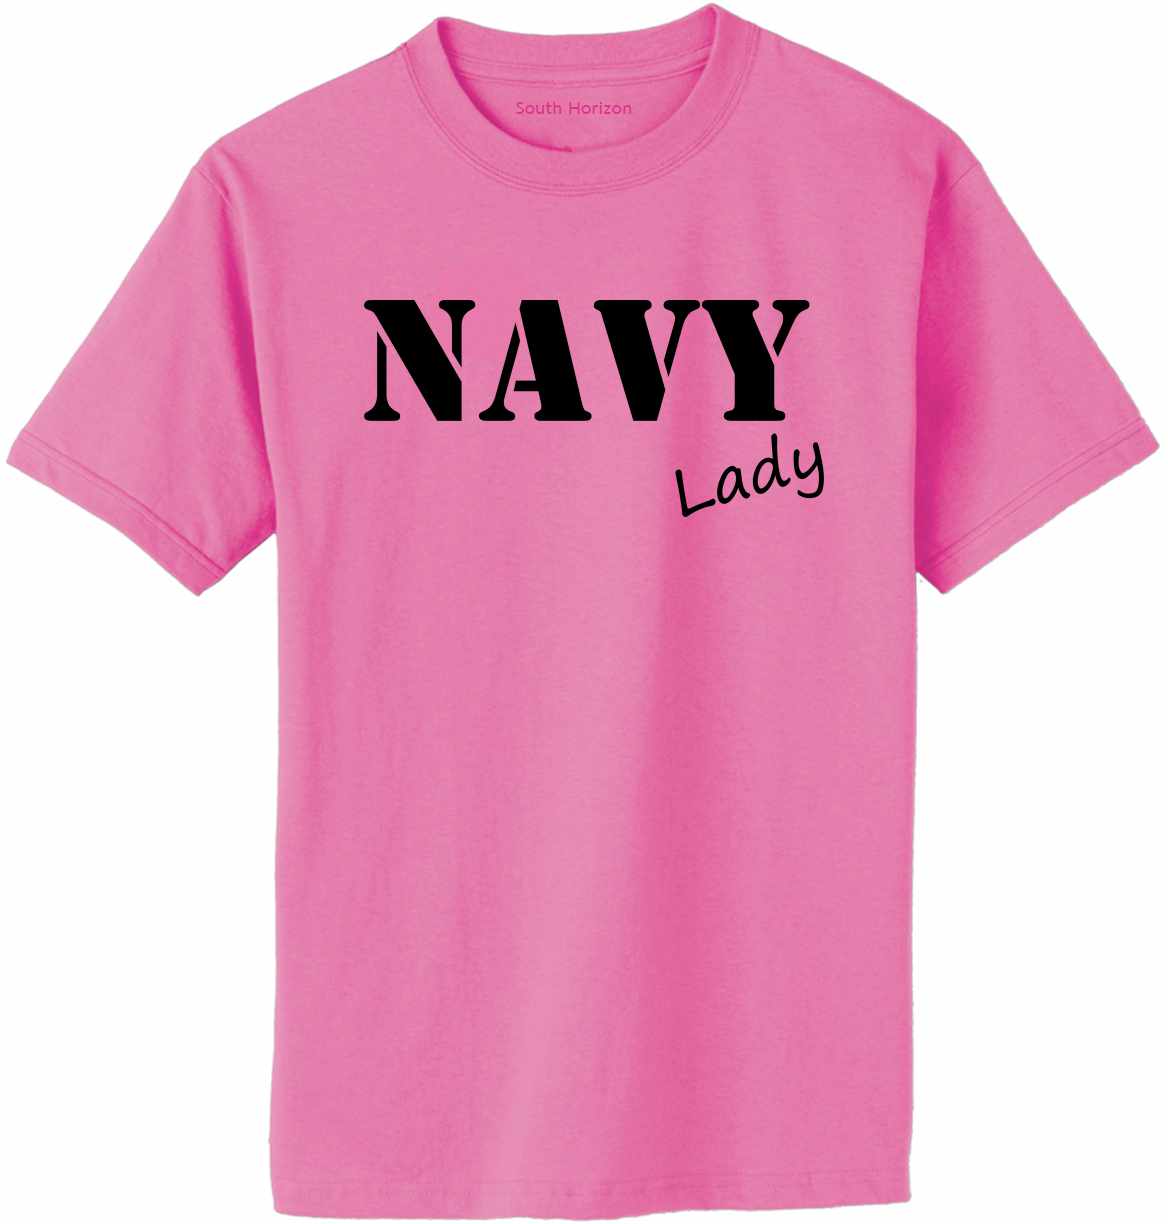 NAVY Lady Adult T-Shirt (#1114-1)